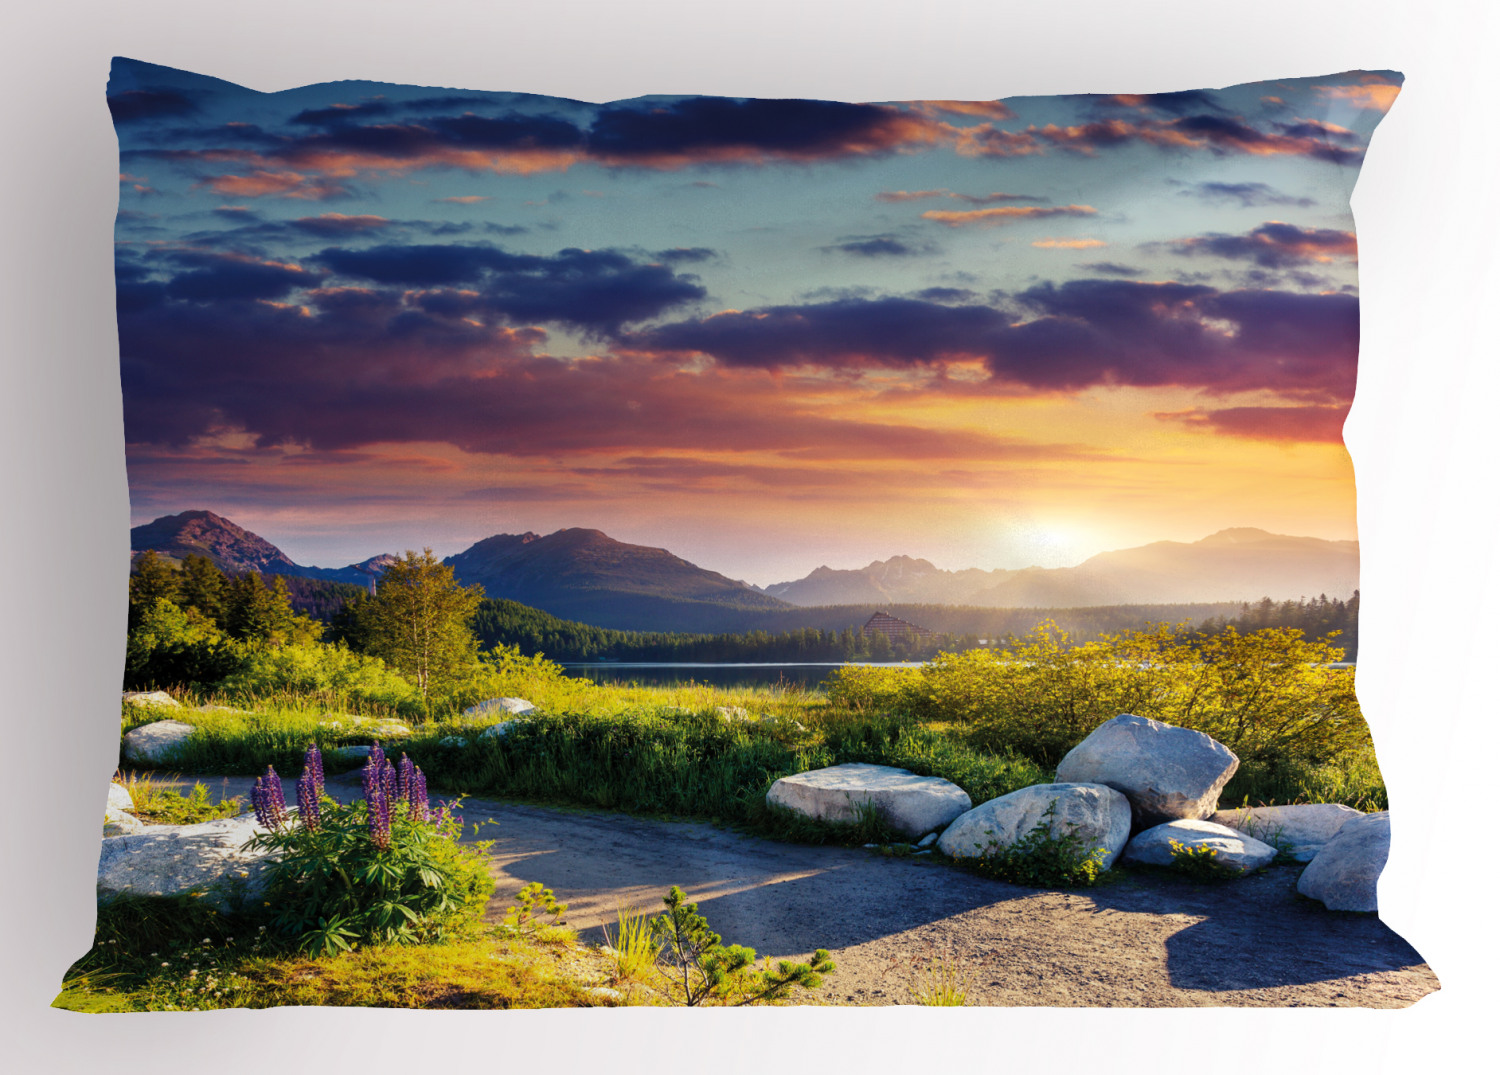 Details about   Northwestern Pillow Sham Decorative Pillowcase 3 Sizes for Bedroom Decor 